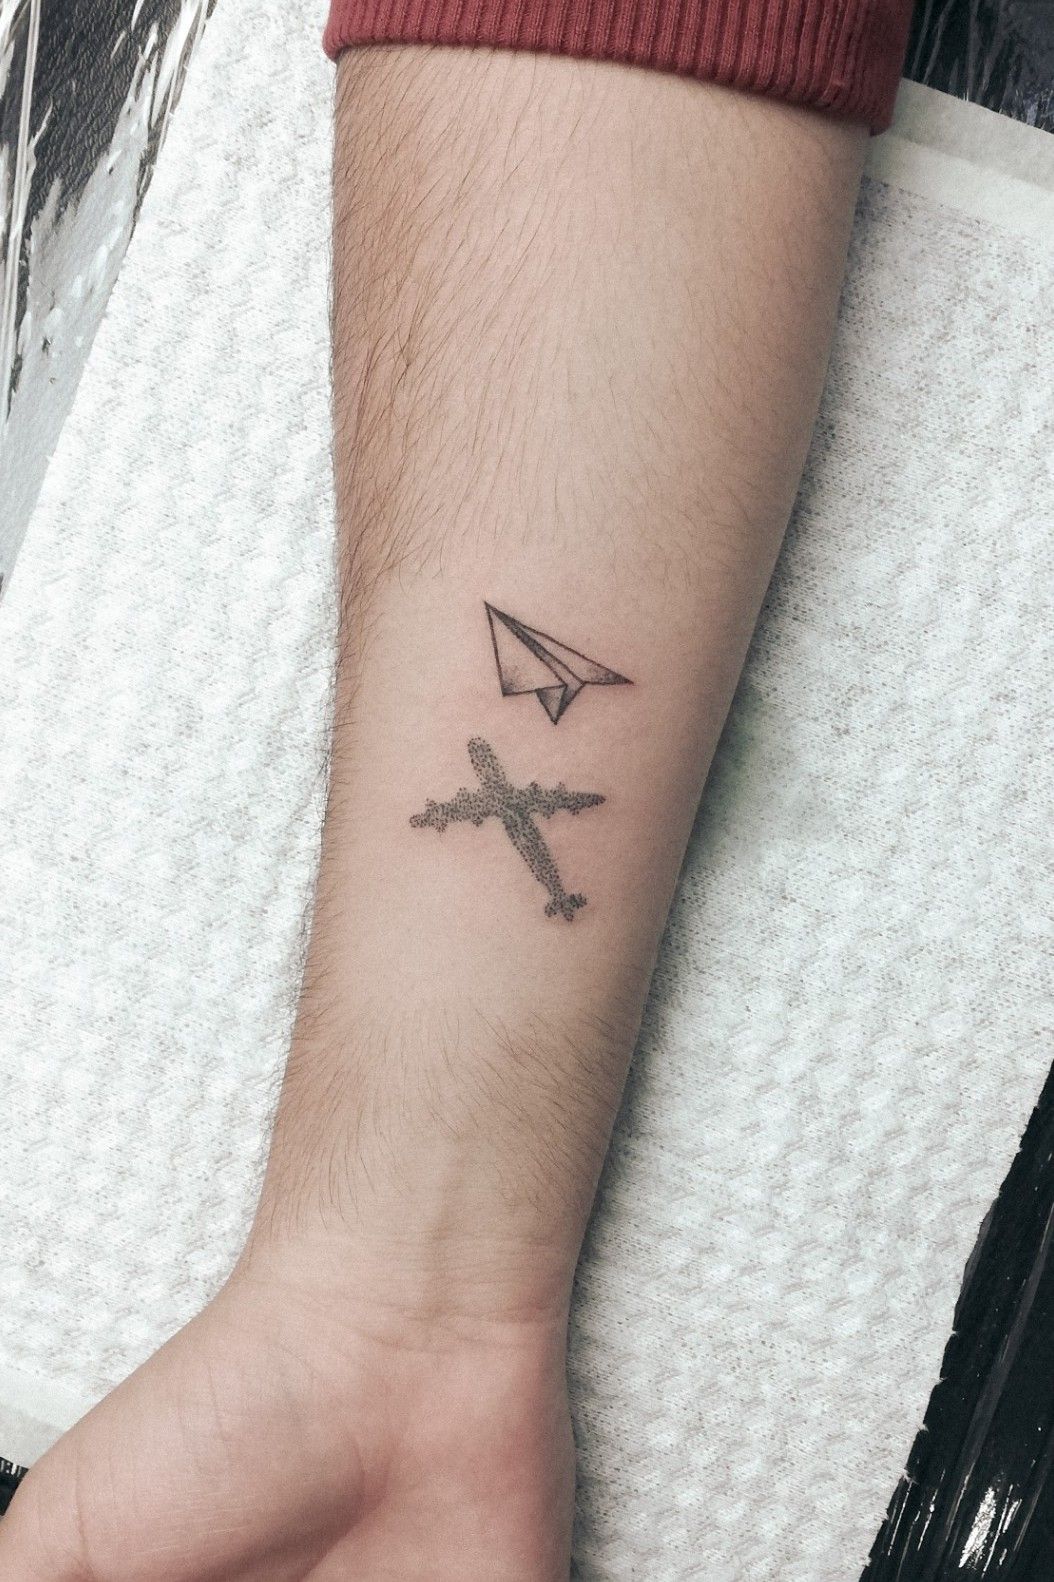 Tattoo uploaded by Alejo Flores • Un aviónsito de papel Sígueme en  Instagram como @alejouflores . . . #tattoo #tattoos #tattooed #tattoing  #tattoowork #tattooart #art #tatuaje #tatuajes #ink #inklife #minimalism  #minimalismtattoo #smalltattoo #